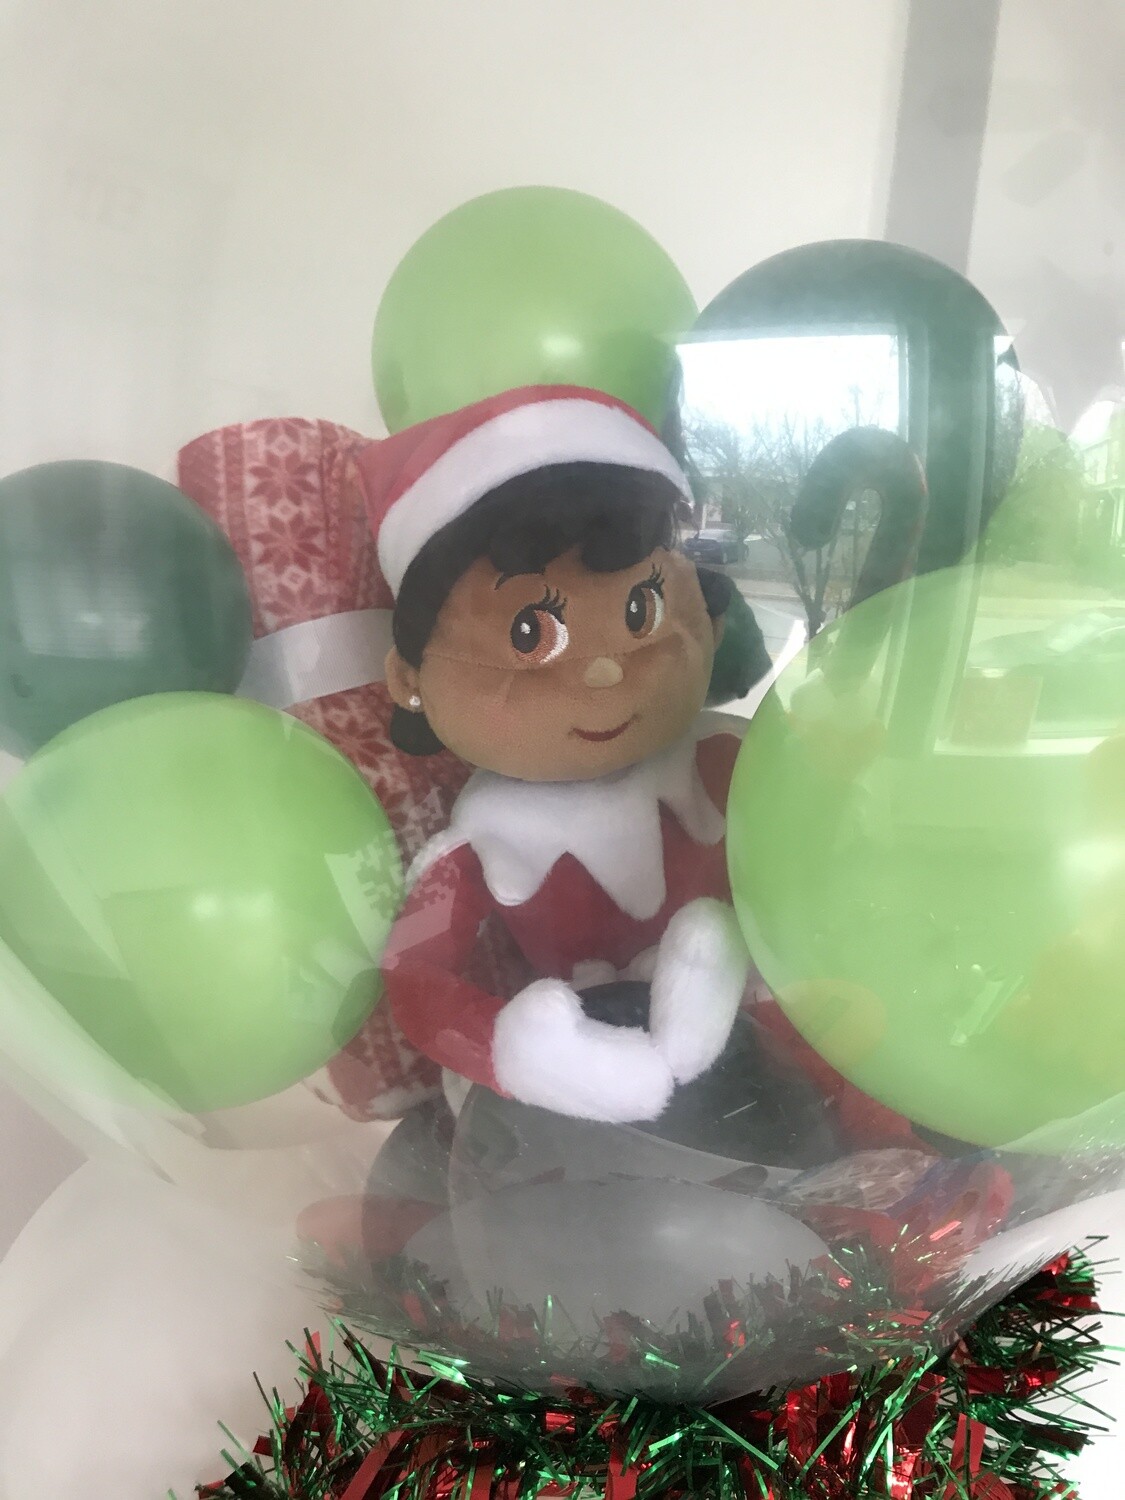 Santa's helper (You provide the doll) stuffed balloon decoration